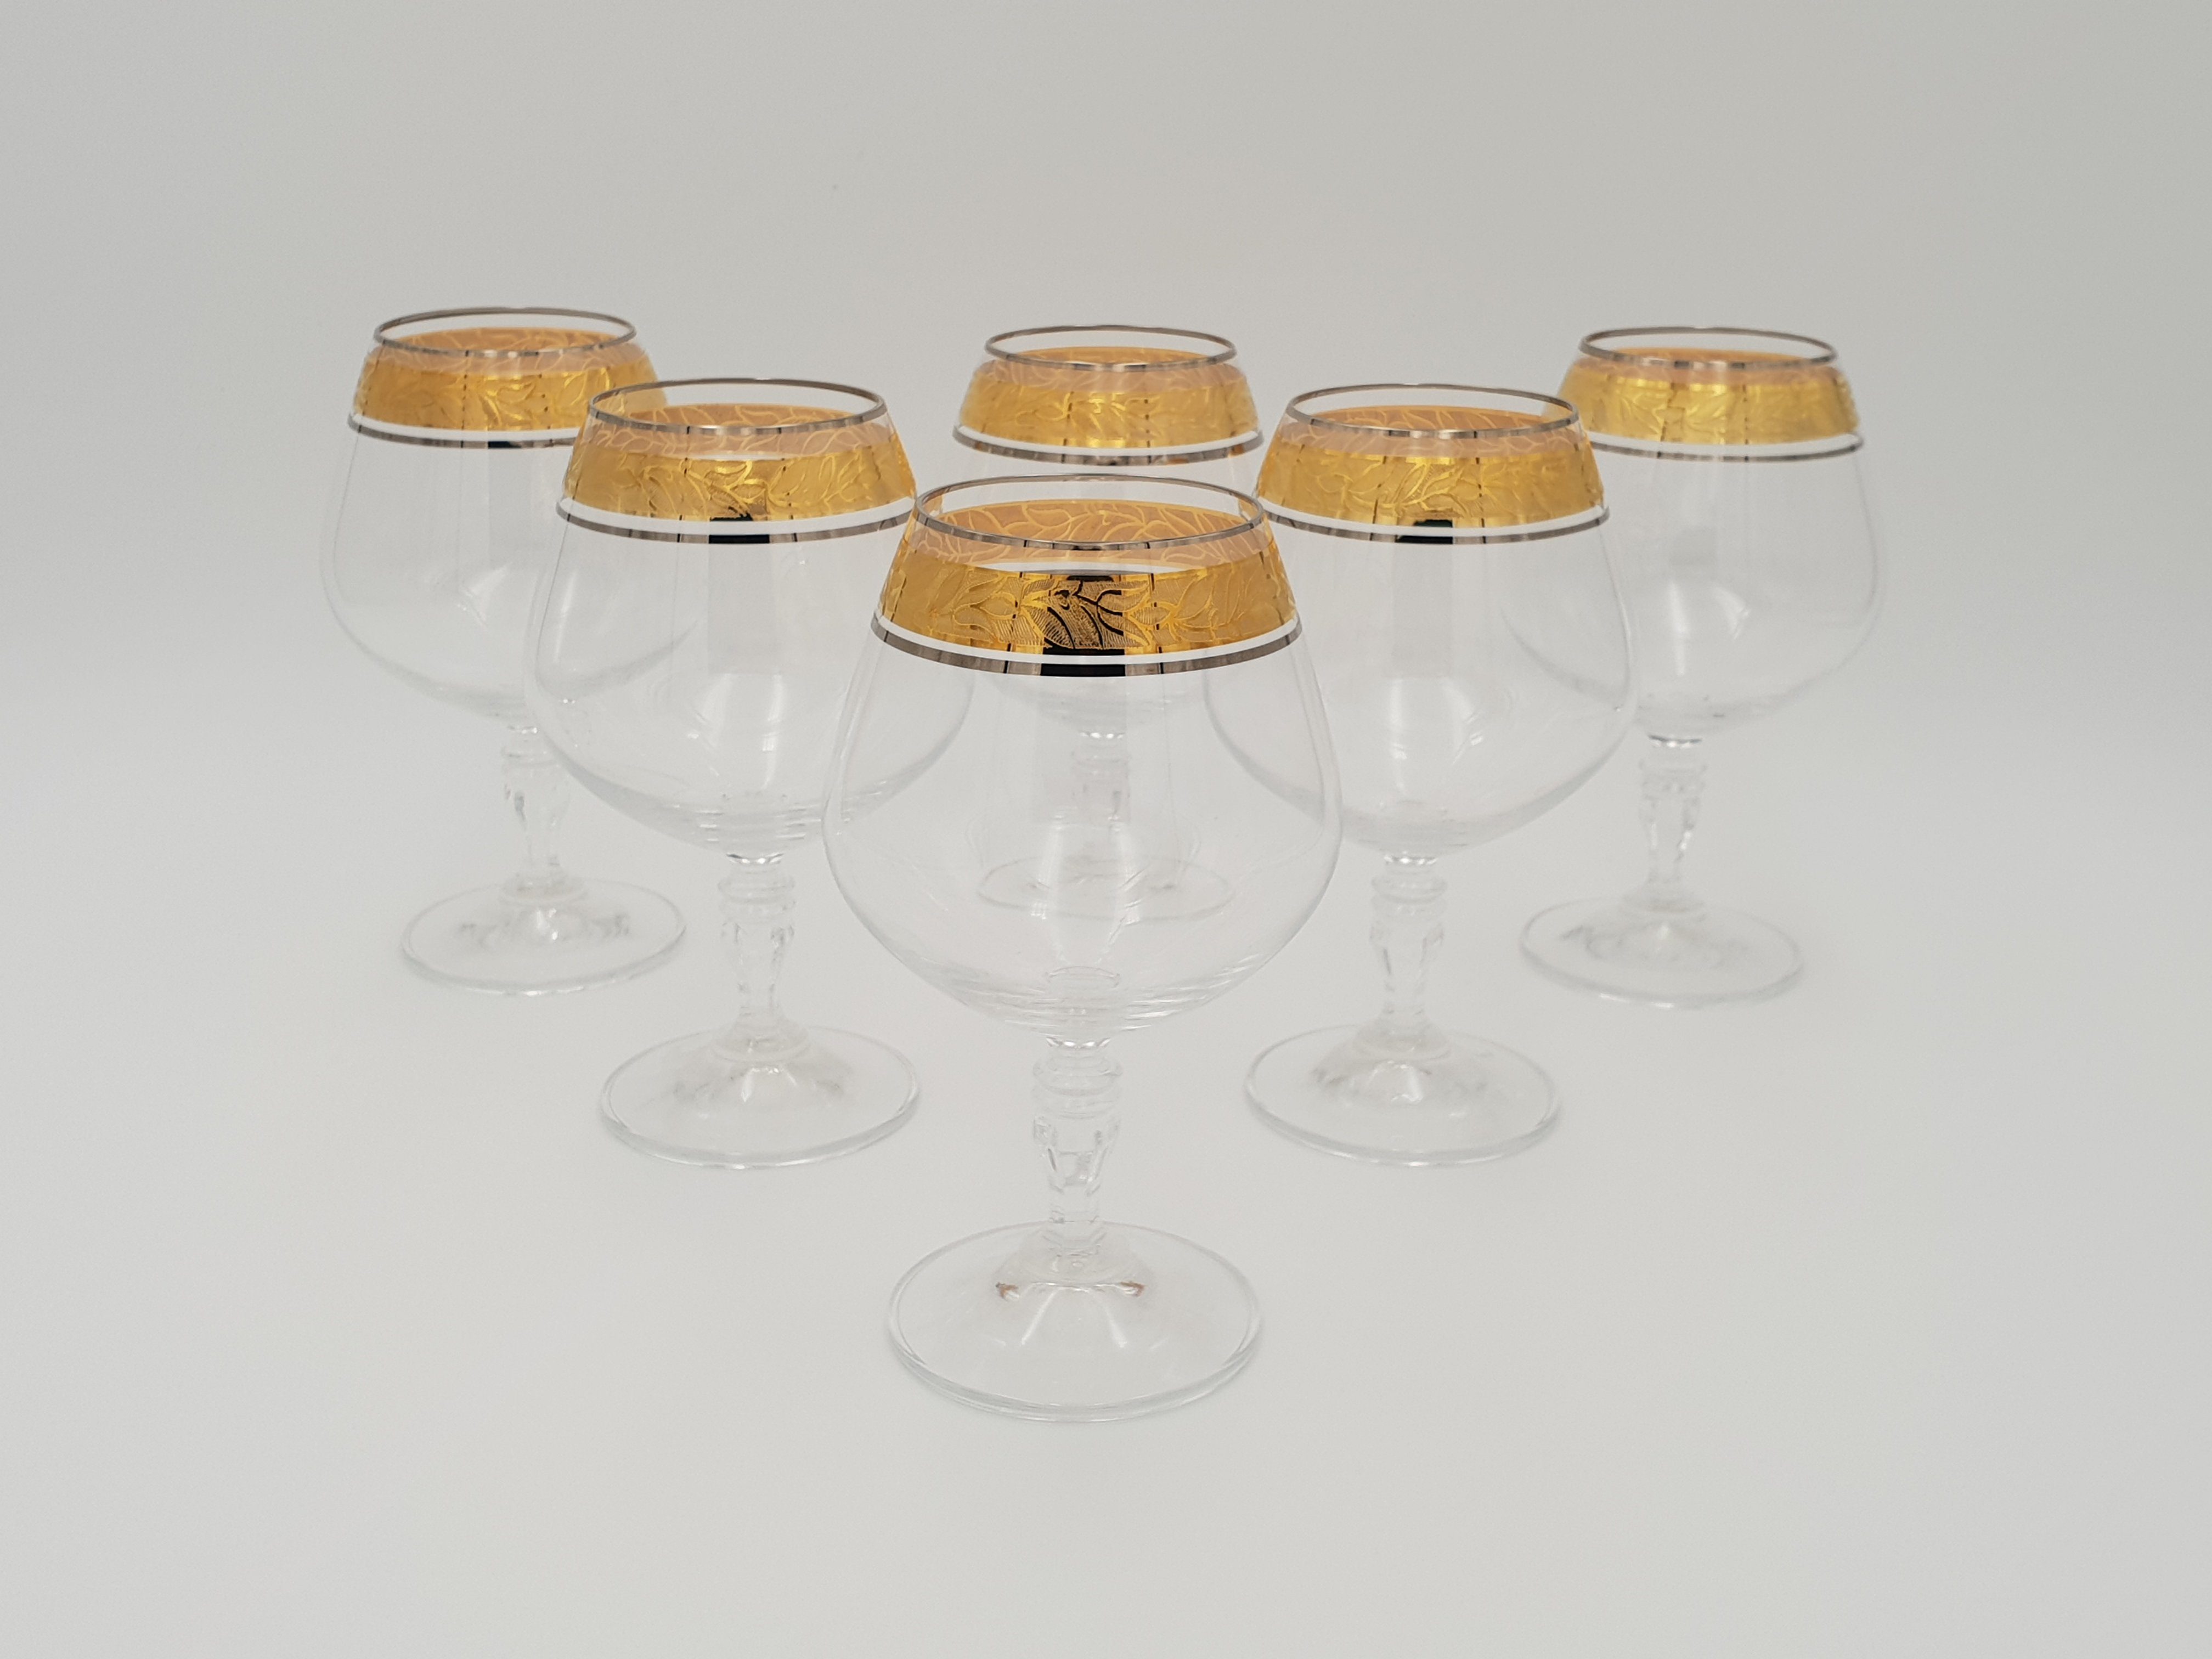 Cognacglas (Gold, Kristallglas, Set, Victoria Kristallglas, Gravur Platin) 6er Cognacgläser Crystalex ml 380